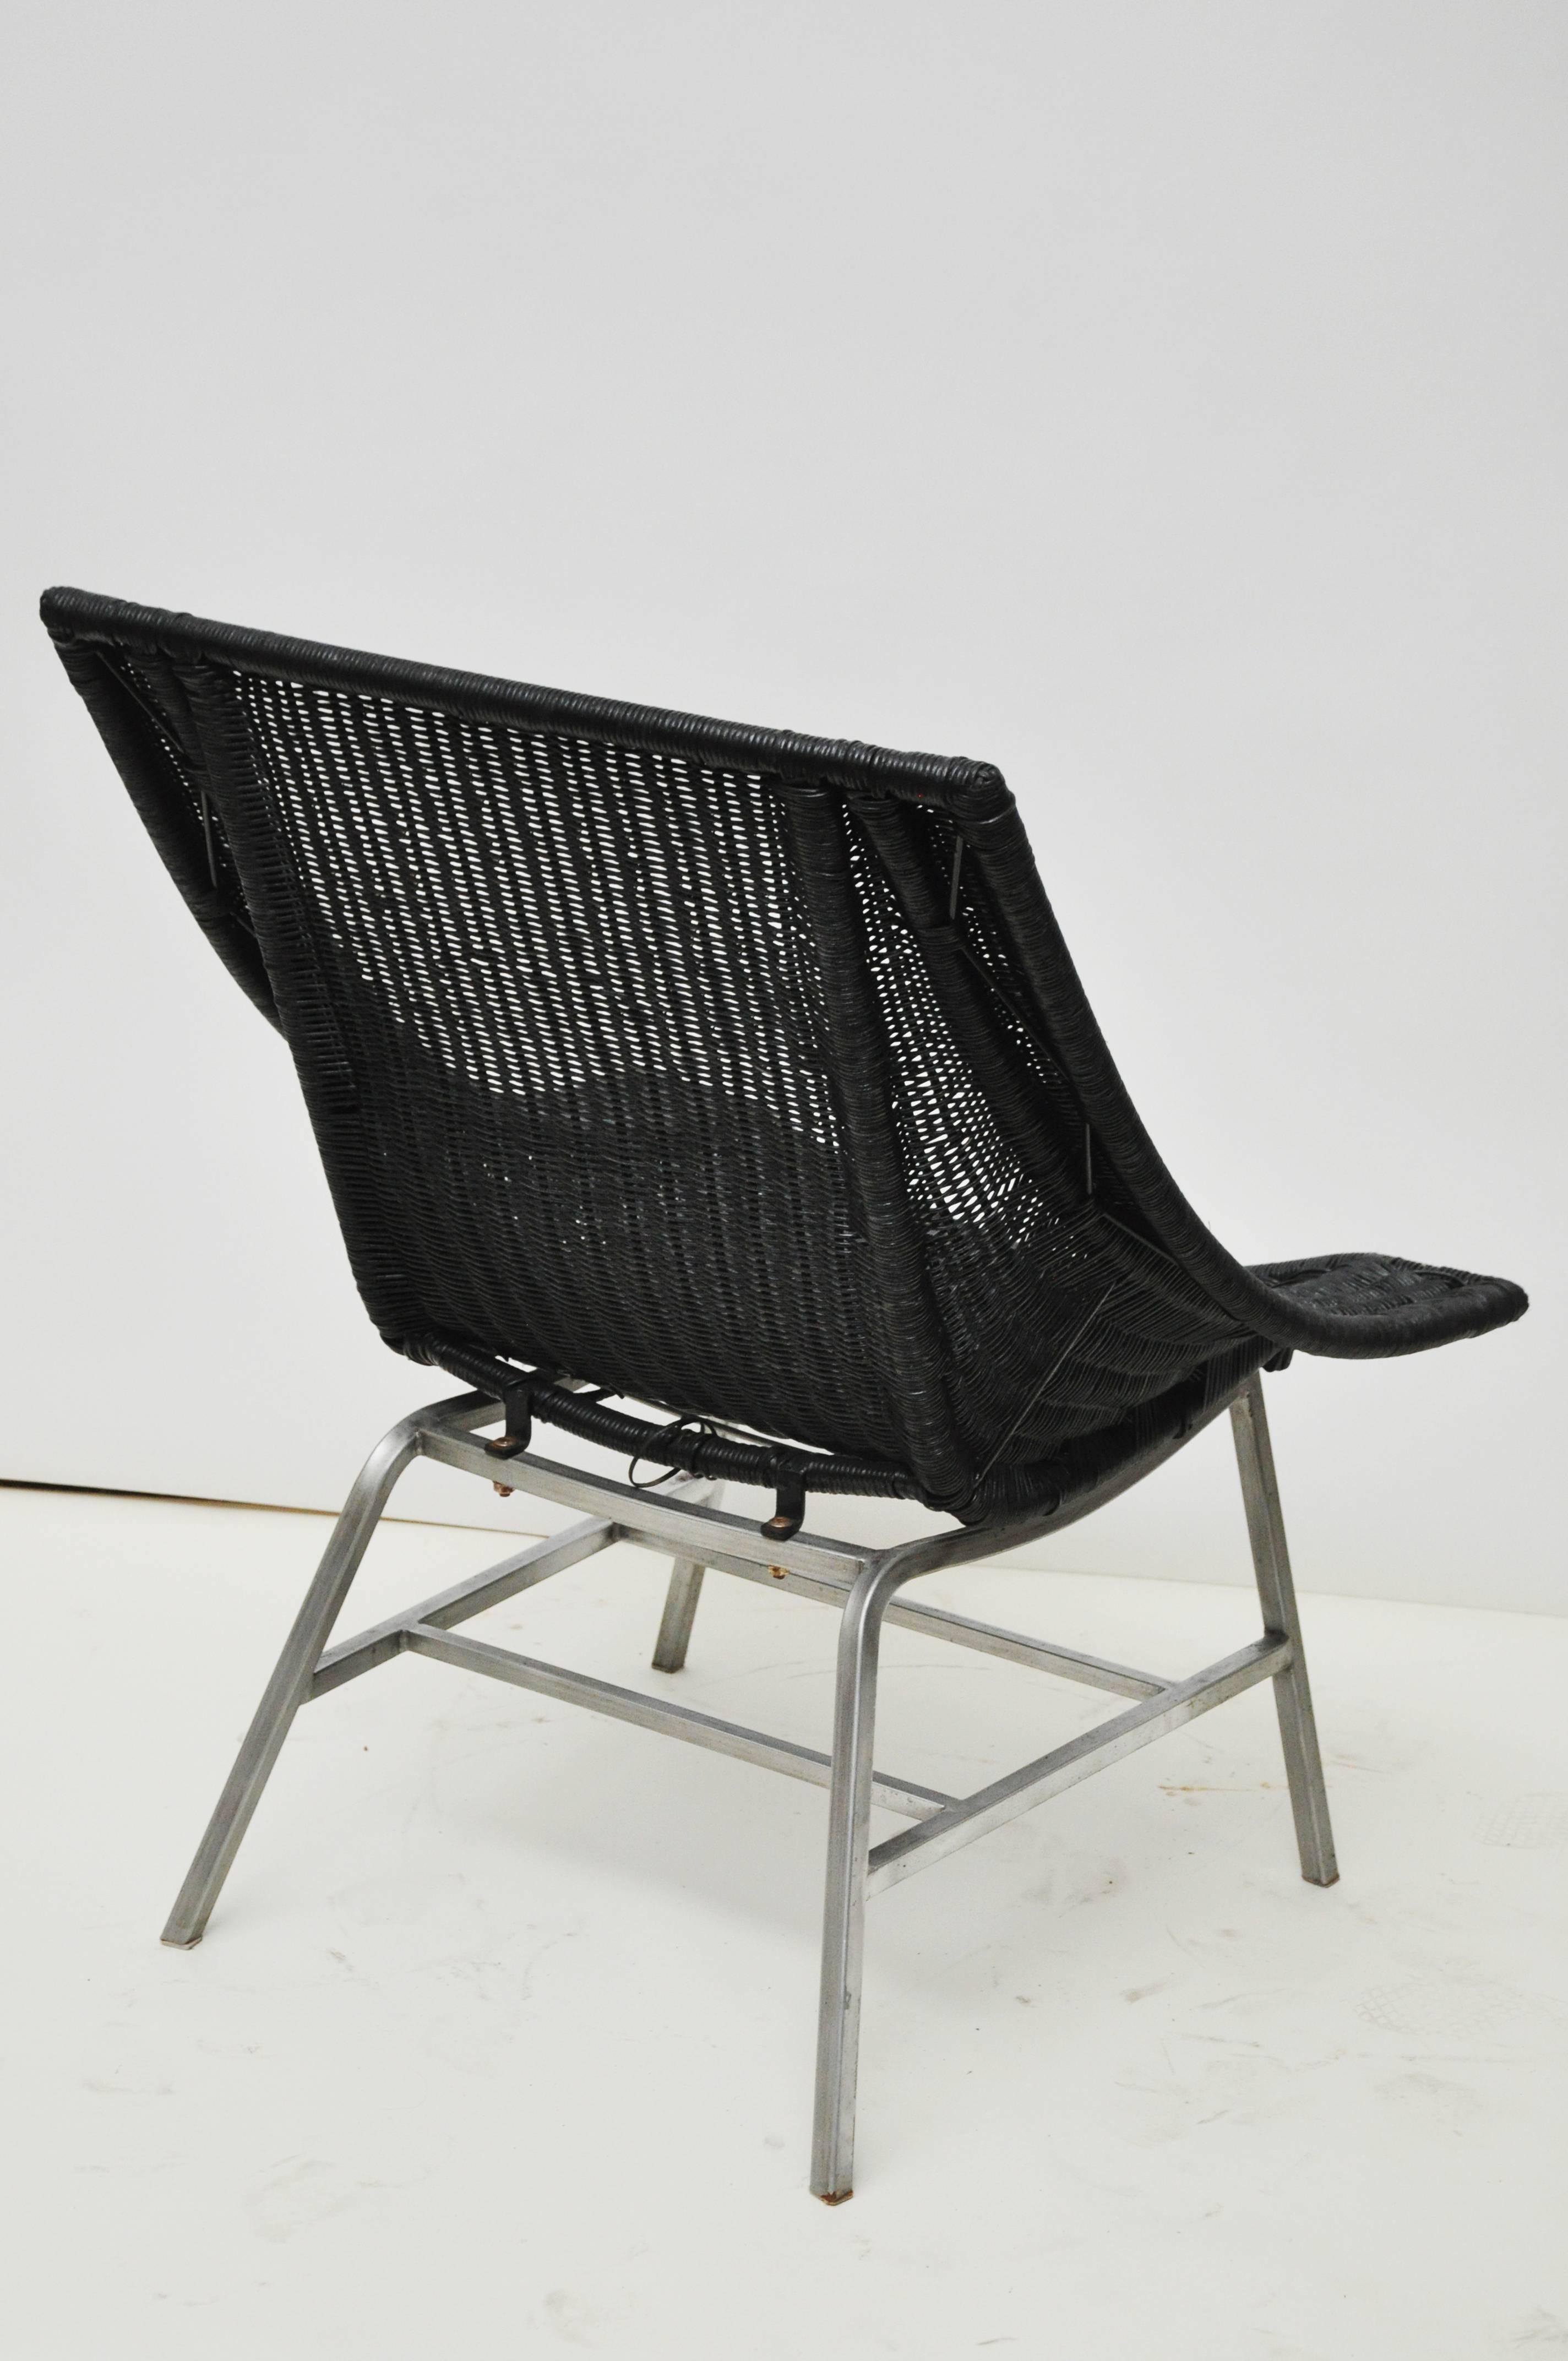 20th Century Mid-Century Modern Wicker Chair For Sale